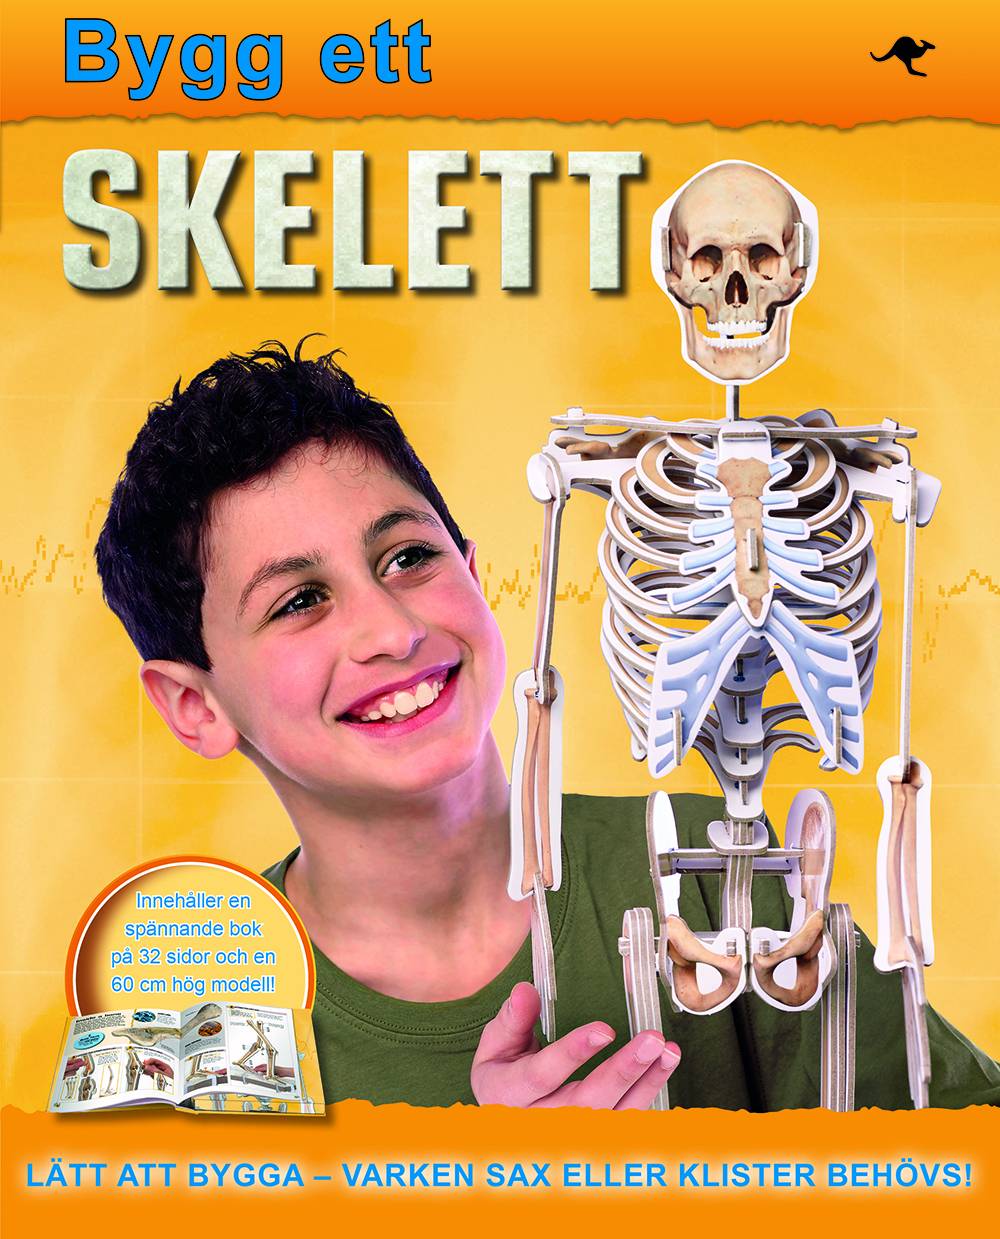 Bygg ett skelett